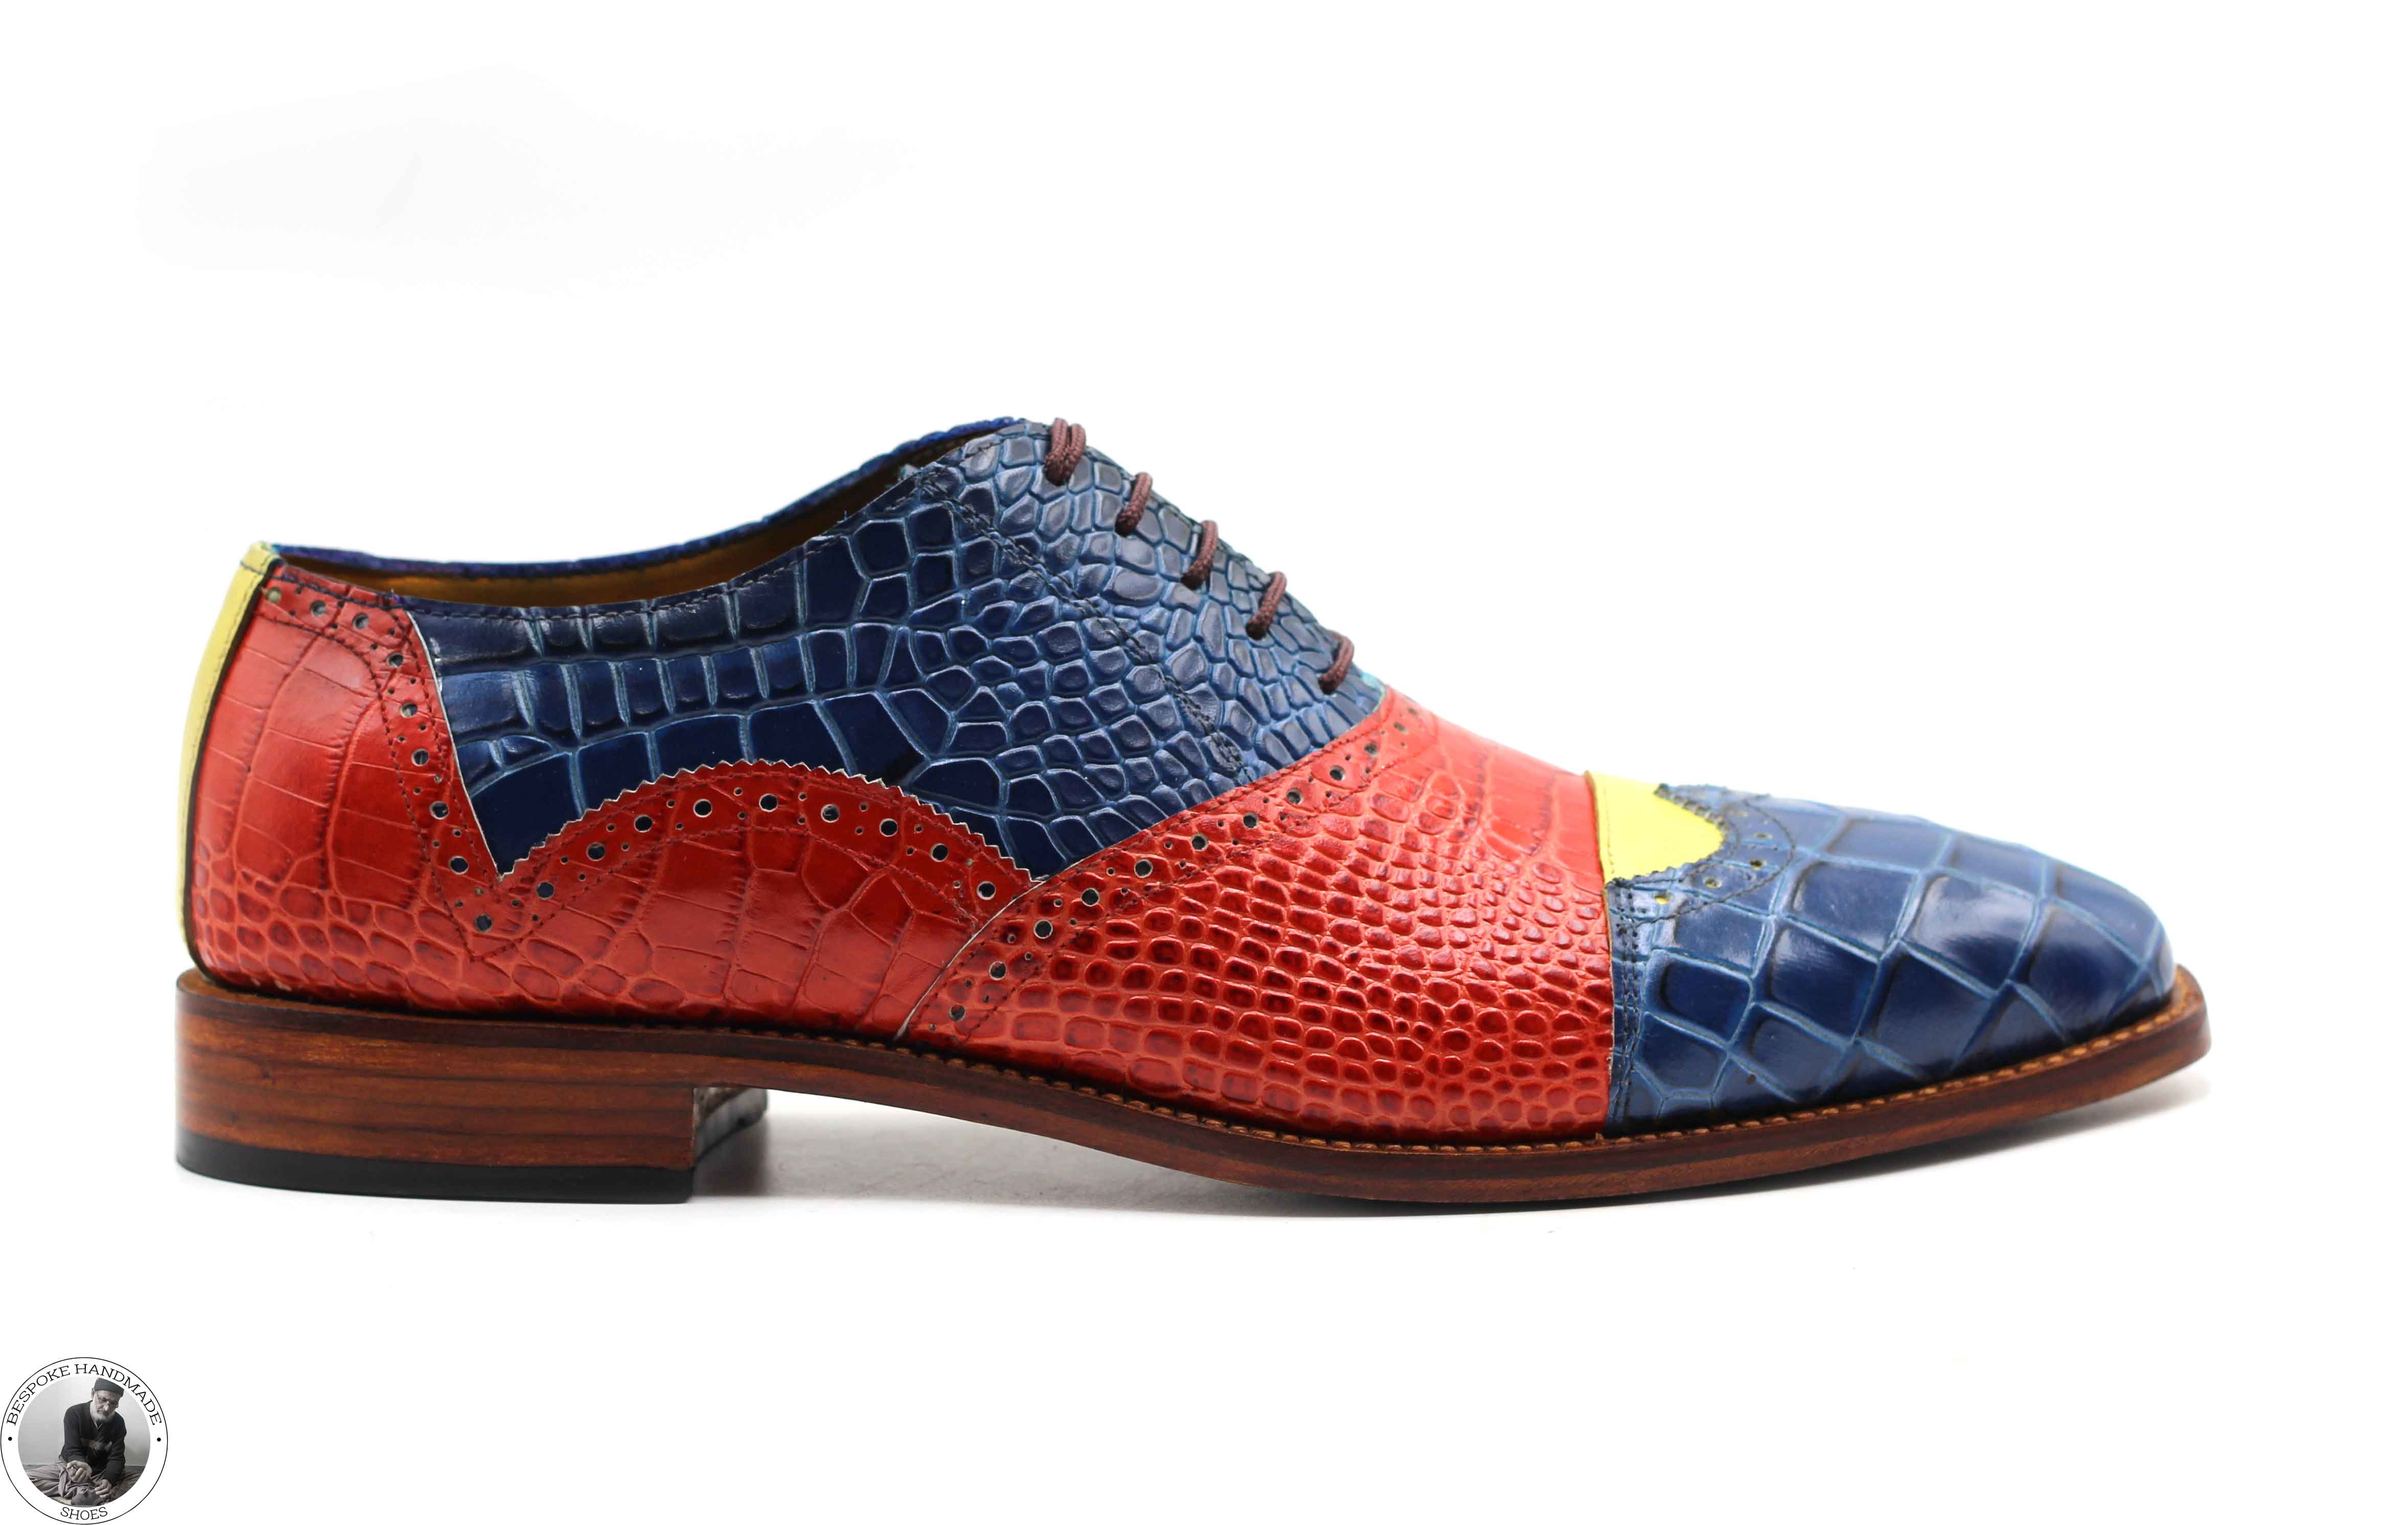 Bespoke Men's Handmade Three Tone Leather Oxford Toe Cap Fashion Shoes For Men's